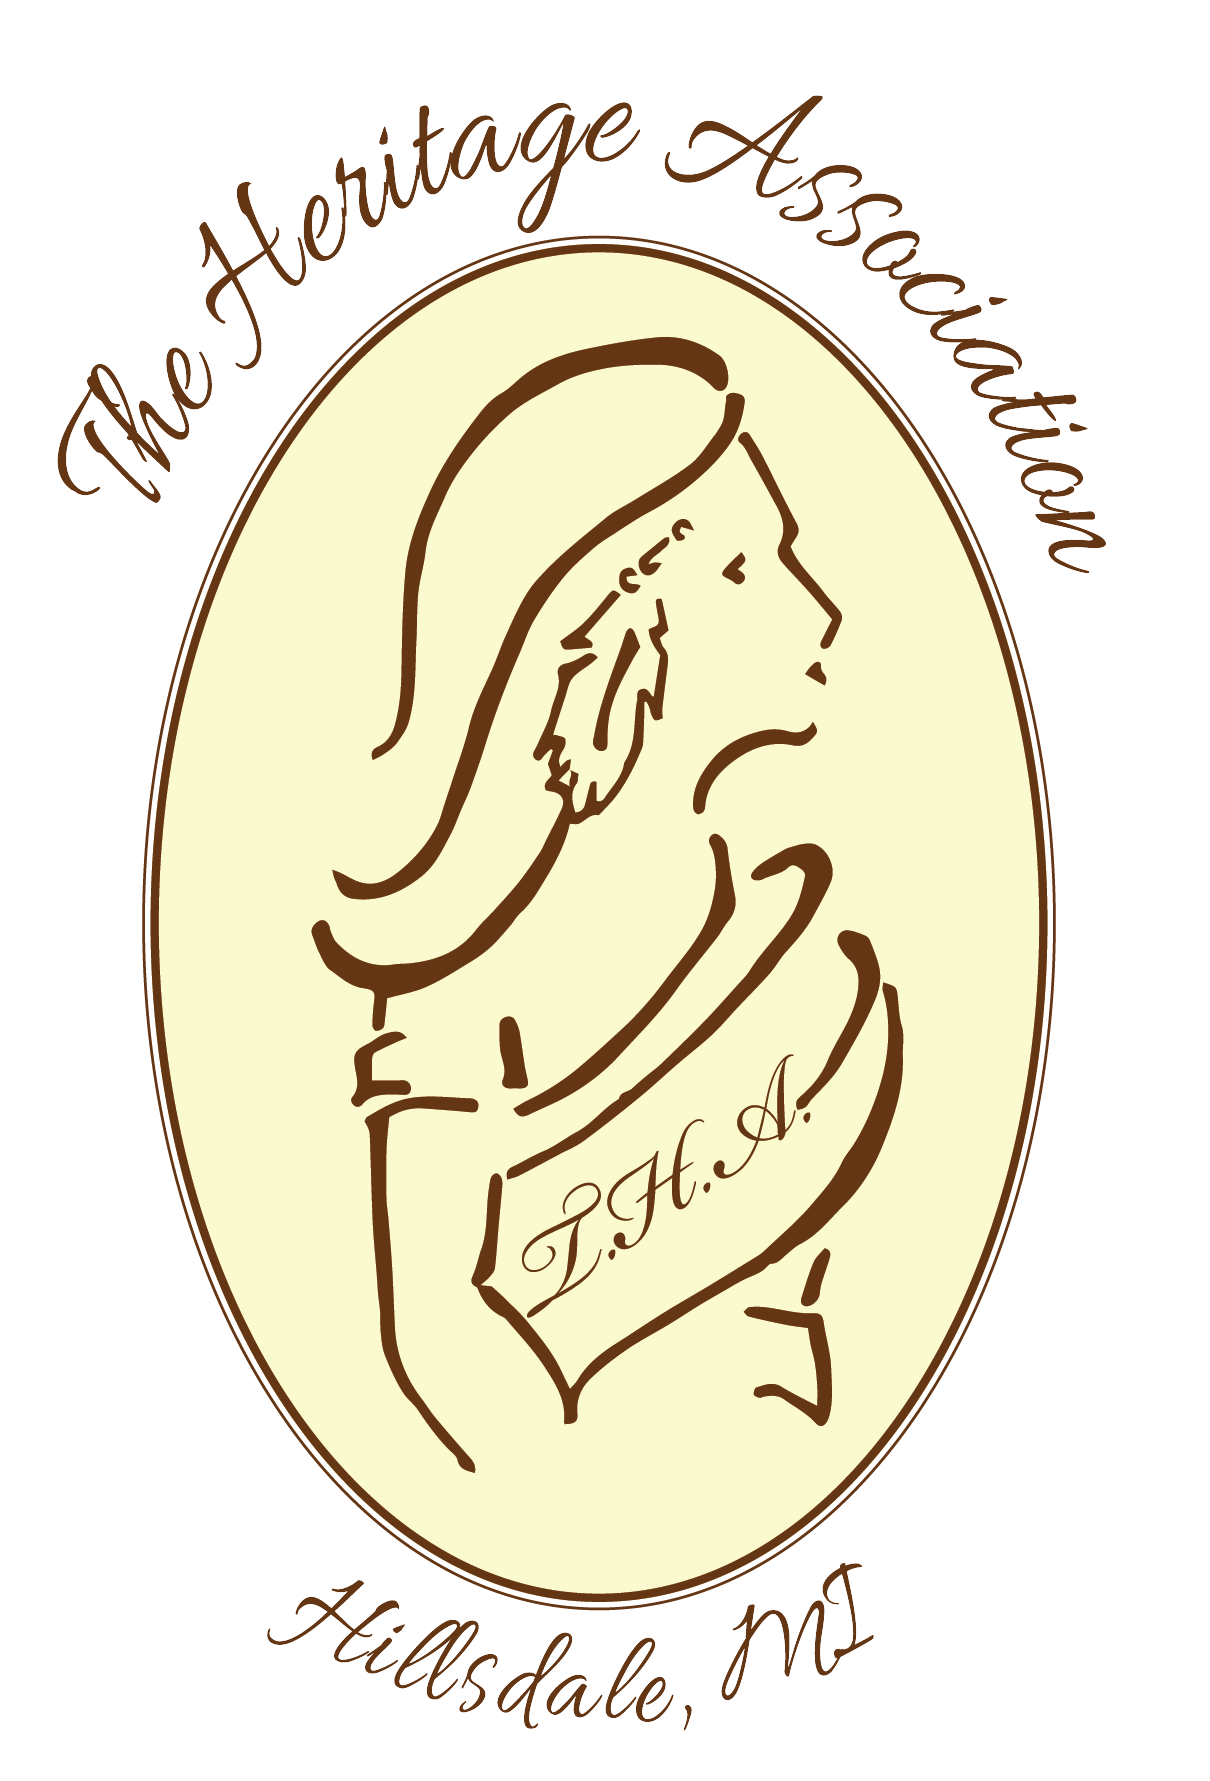 The Heritage Association logo